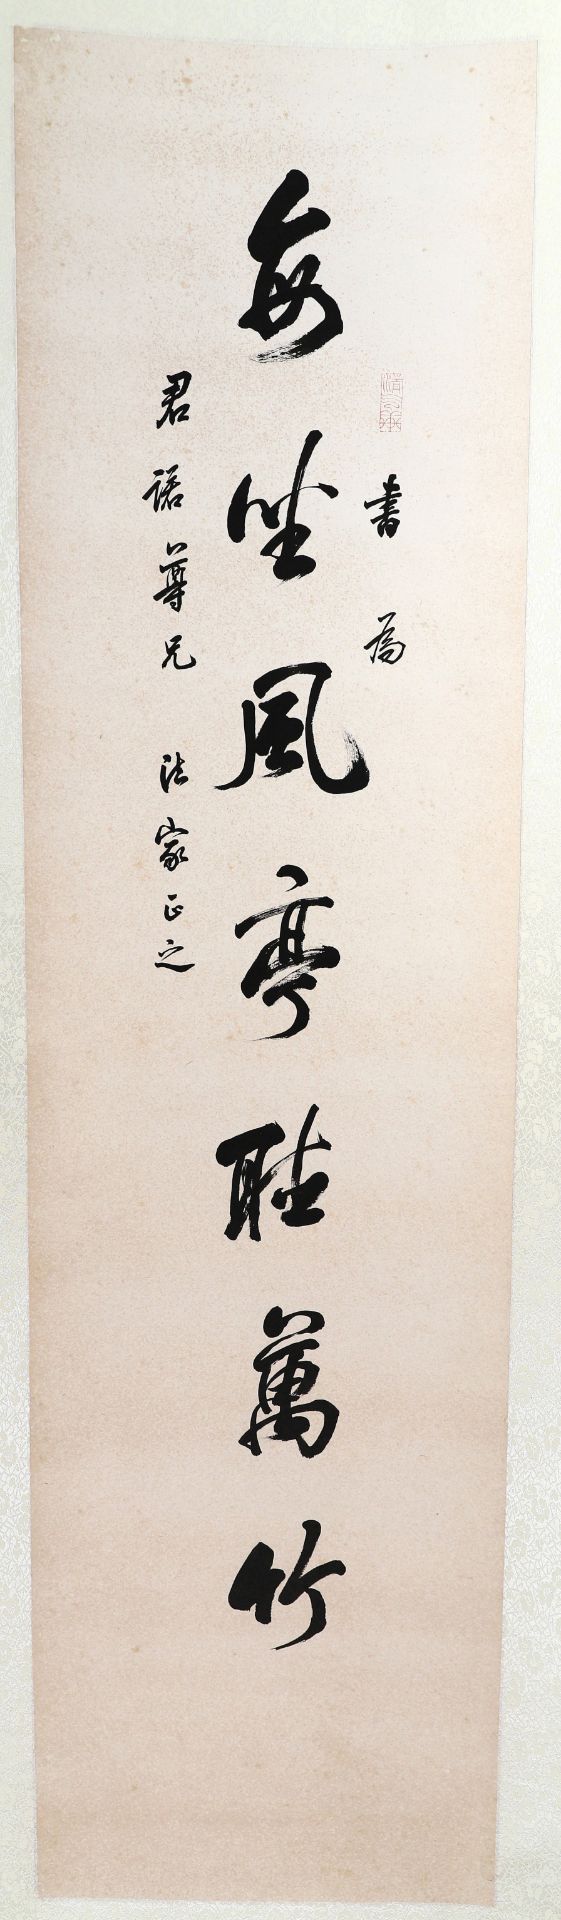 WU HUA YUAN (1893-1972) - Image 3 of 3